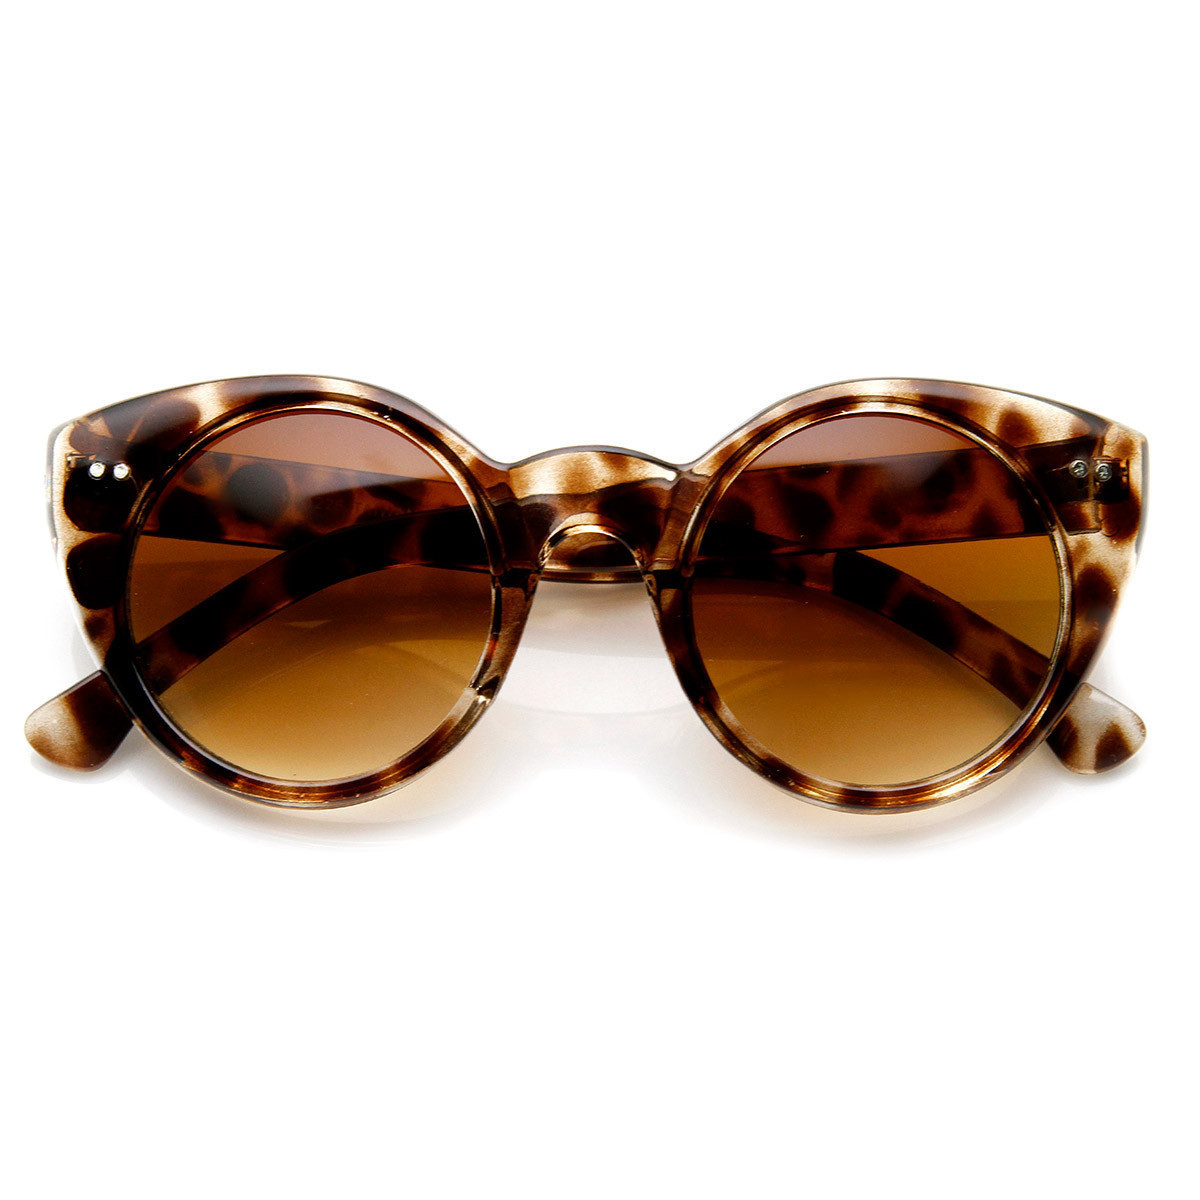 Modern Cateyes Vintage Inspired Circle Cat Eye Round Sunglasses W/ Metal Rivets - 8297 - Black